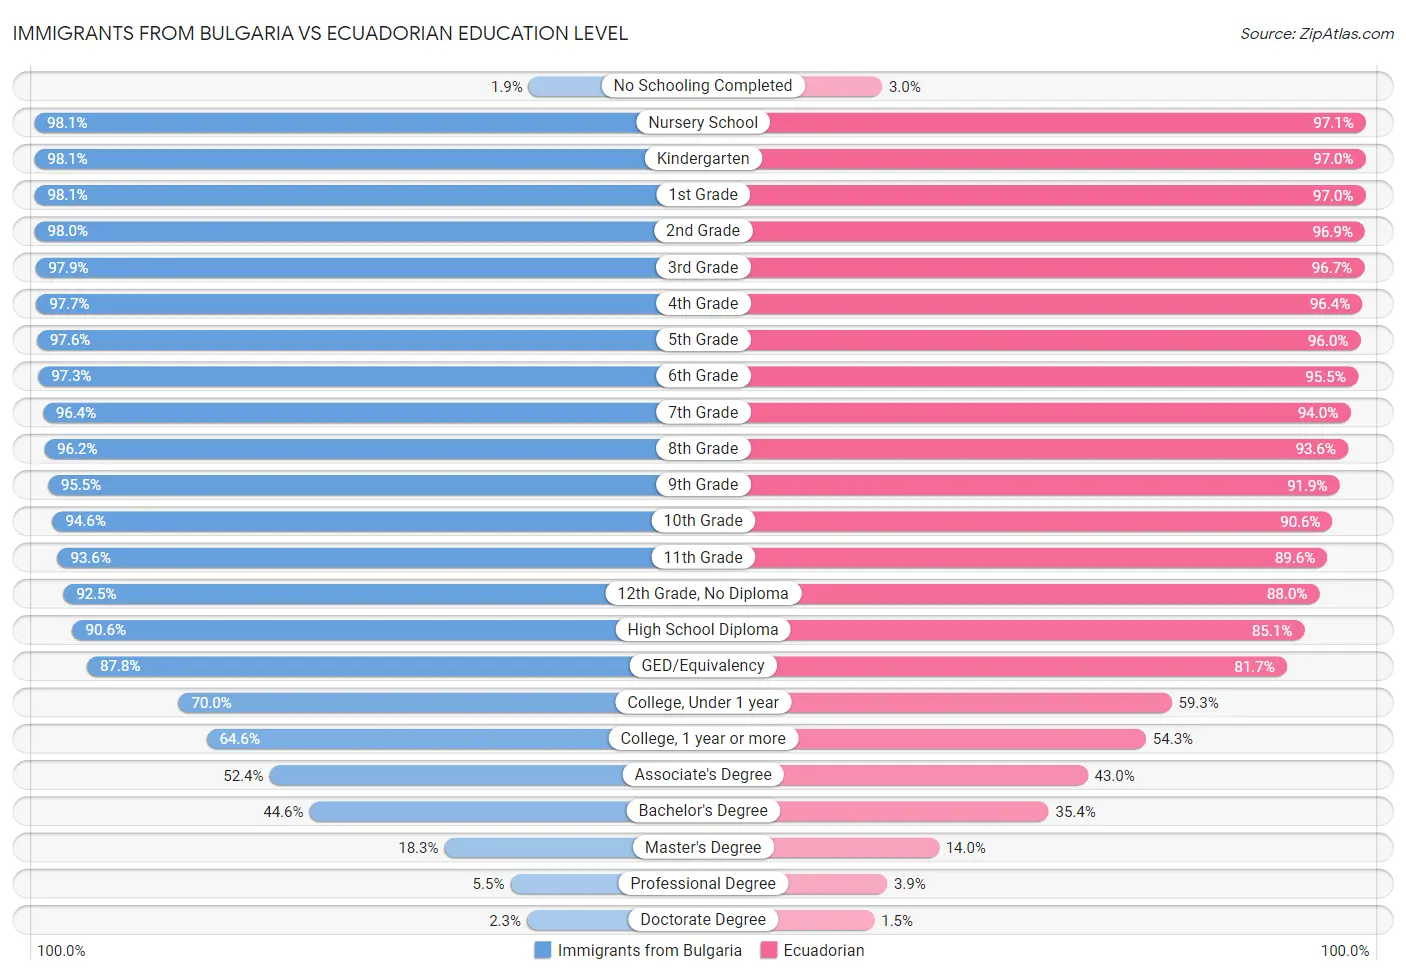 Immigrants from Bulgaria vs Ecuadorian Education Level